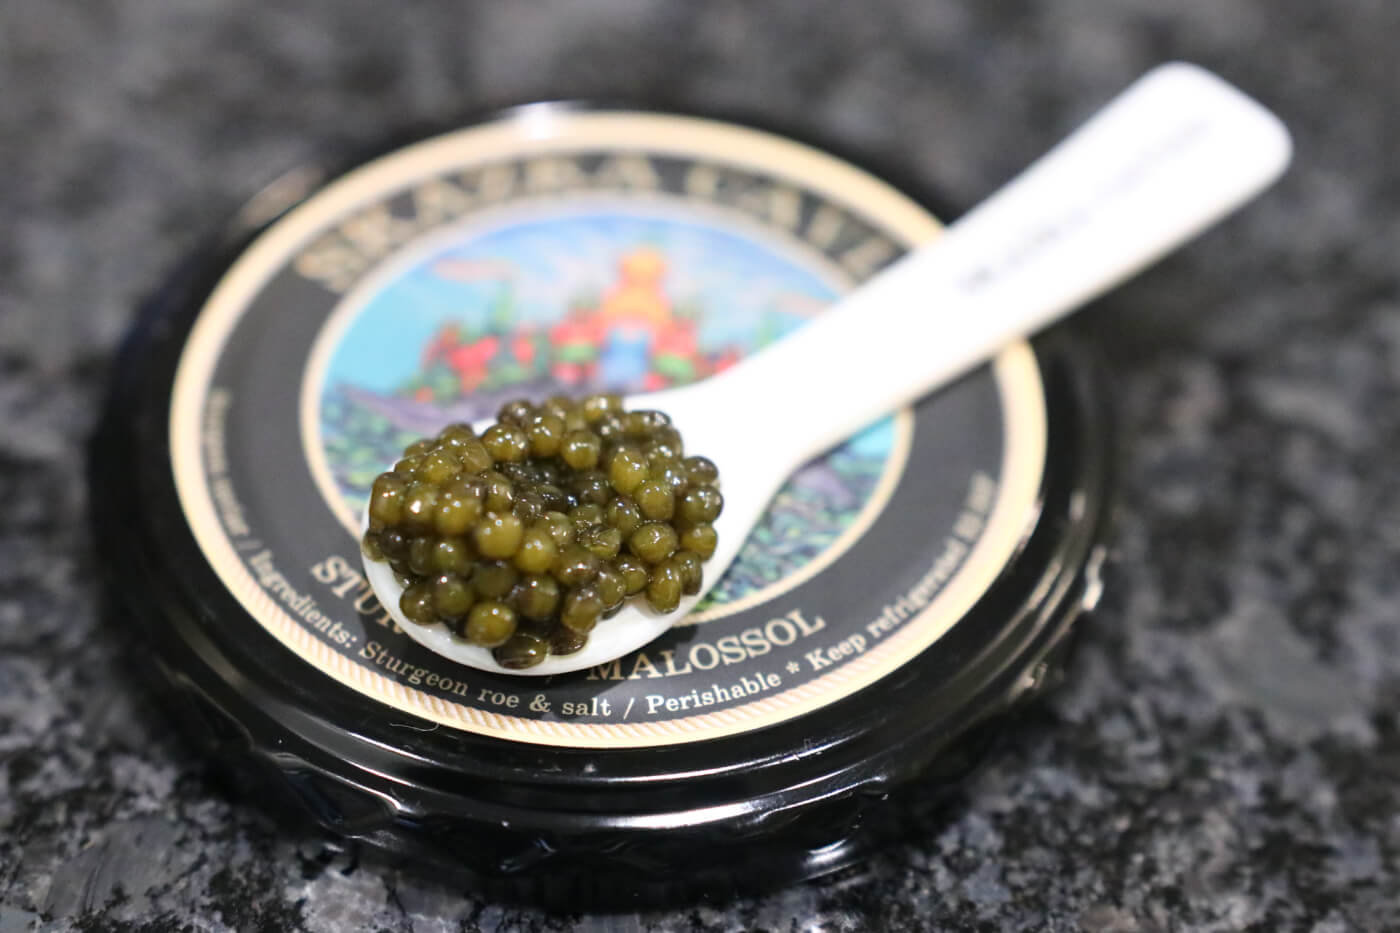 what does caviar taste like